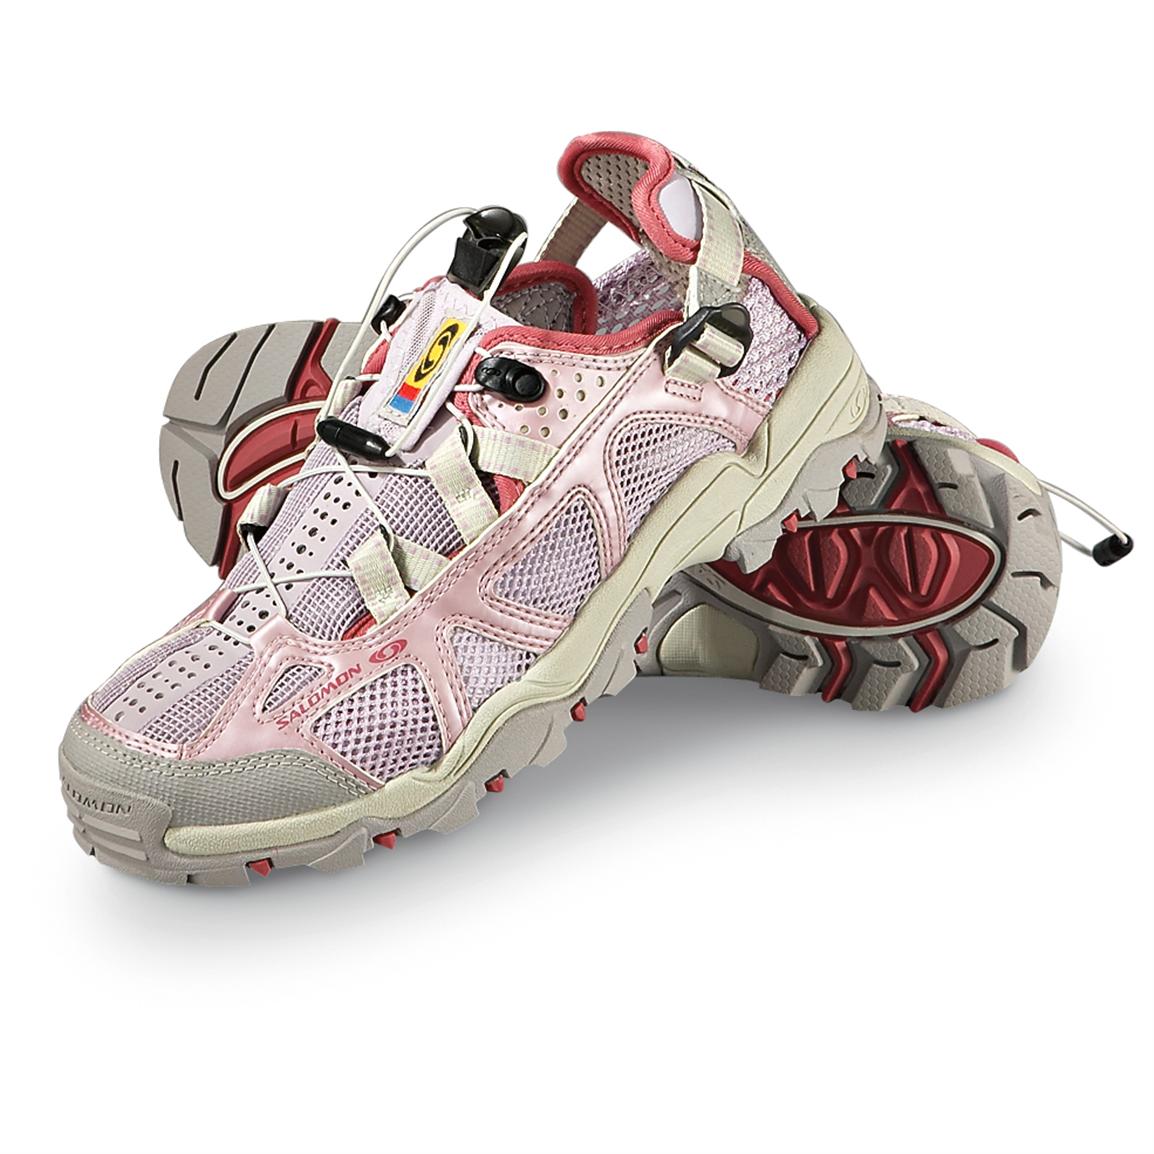 Women's Salomon® Techamphibian Water Shoes, Pink 170836, Boat & Water Shoes at Sportsman's Guide